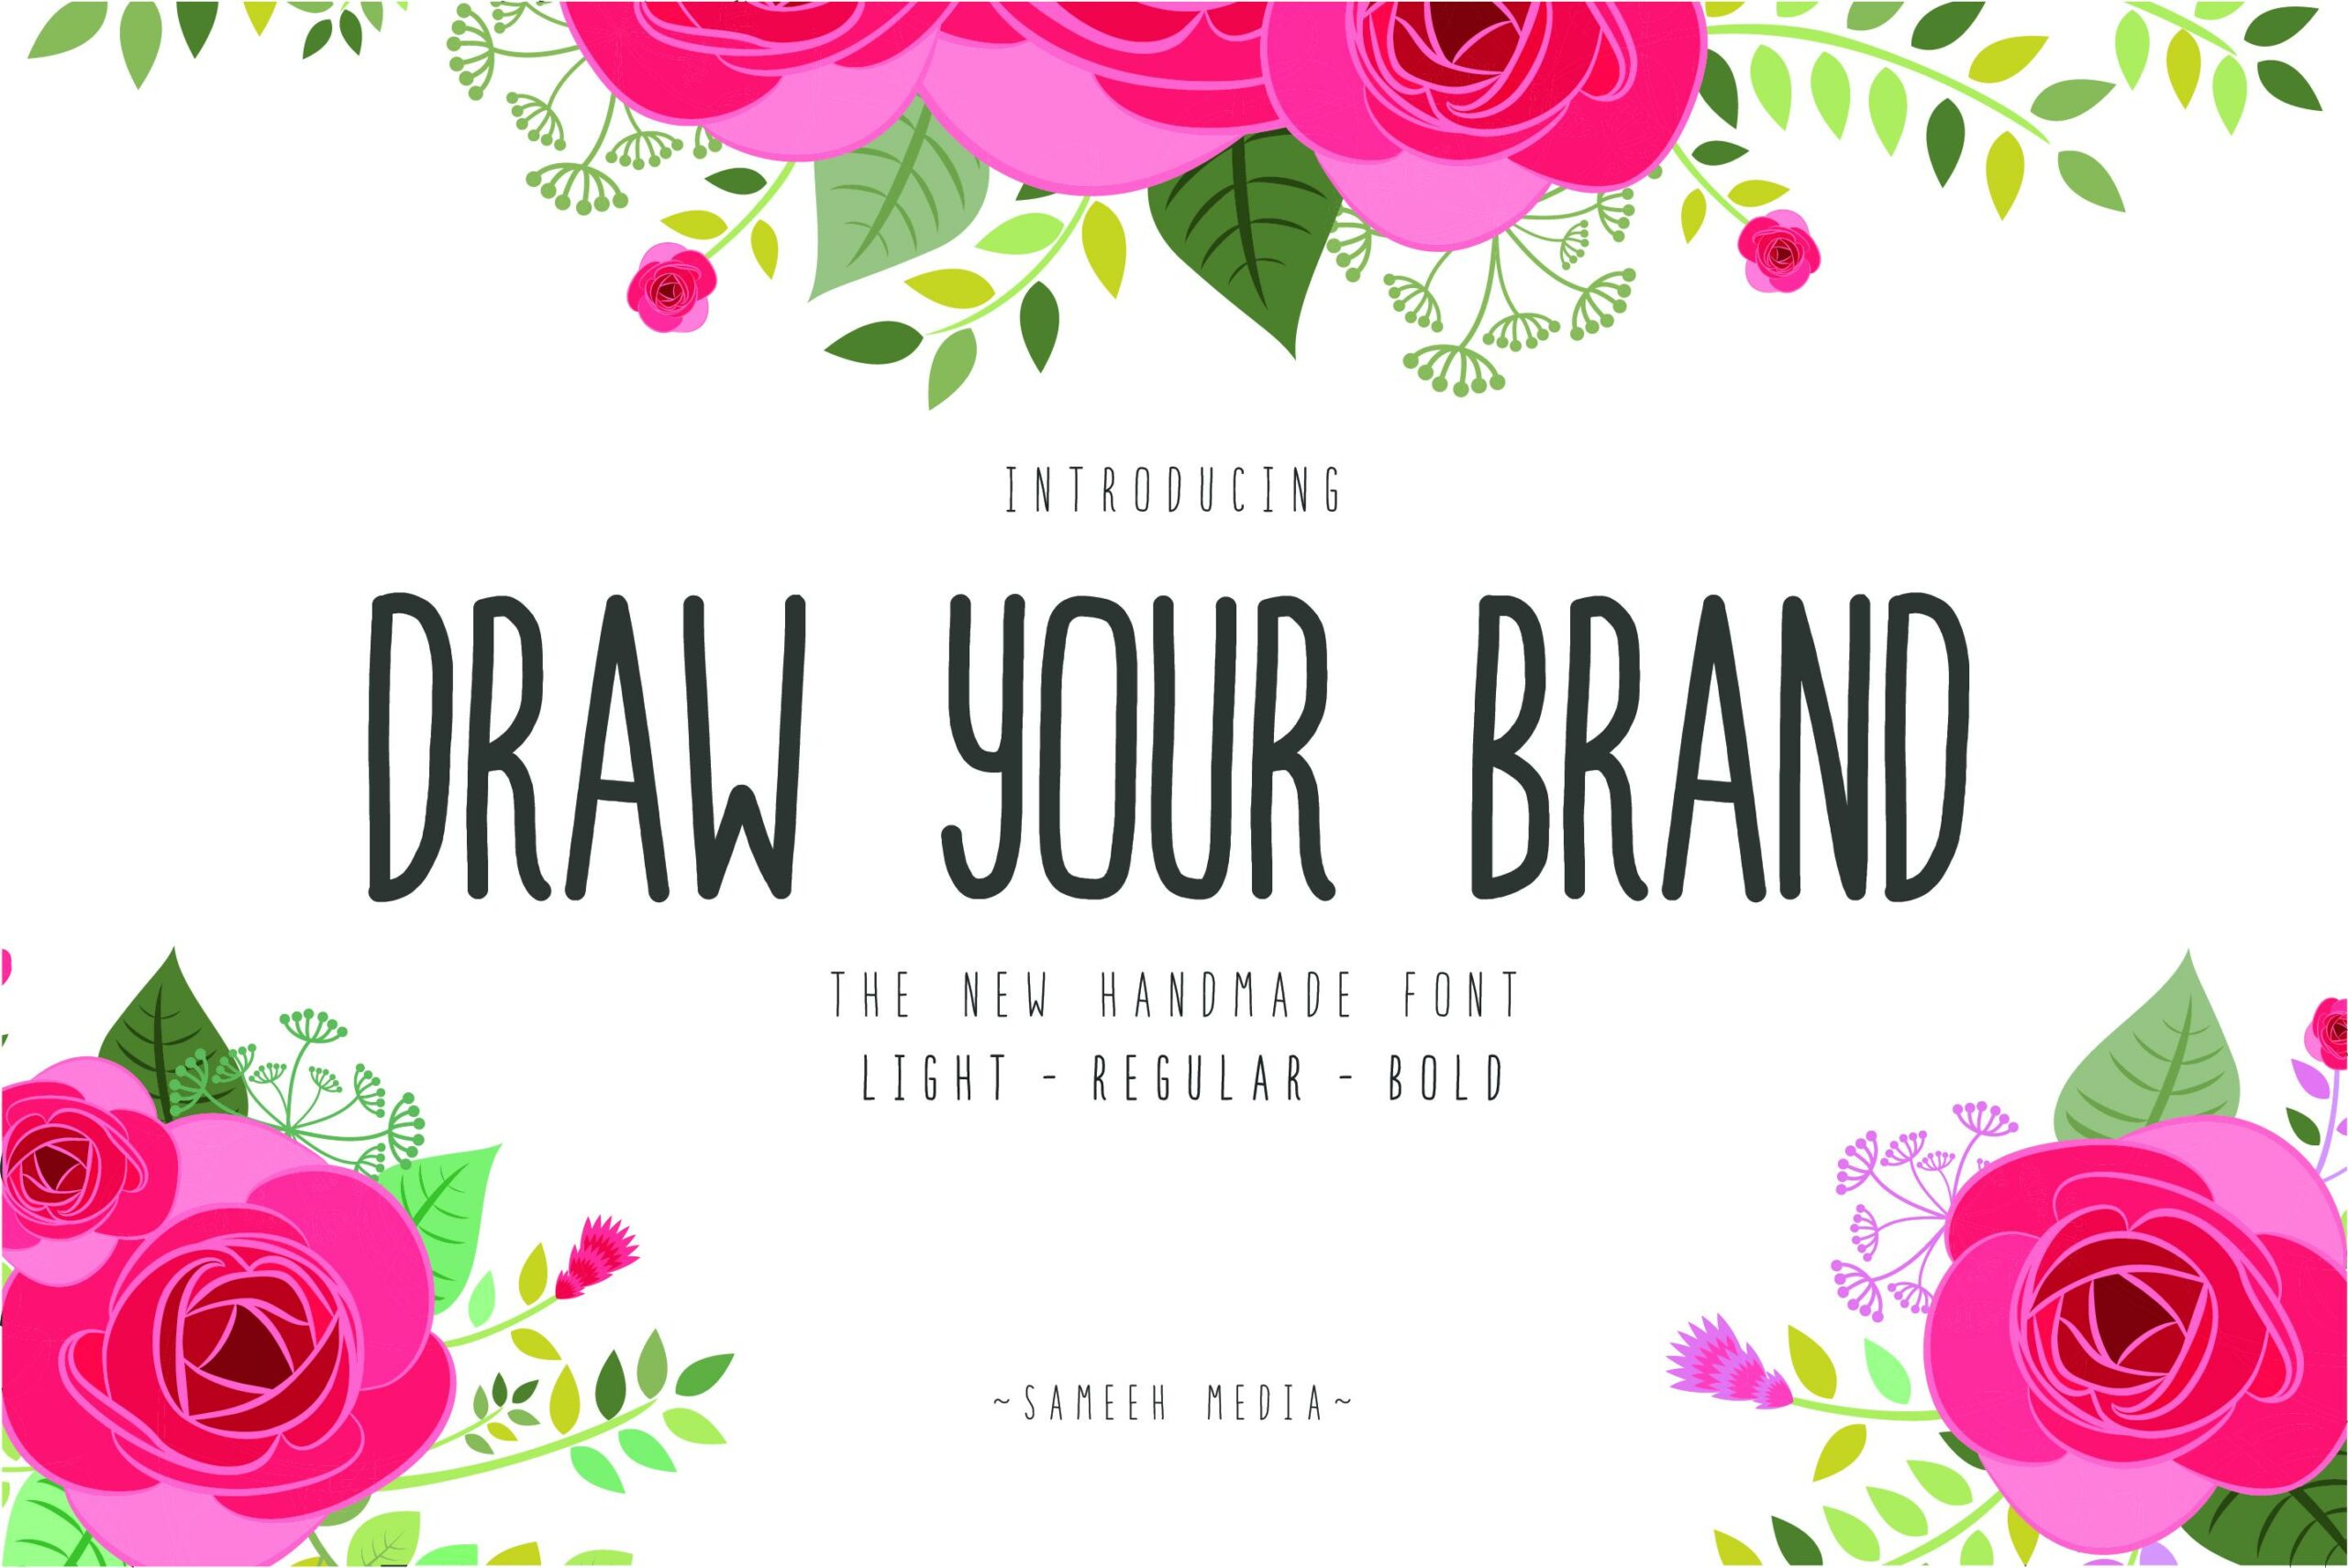 Draw Your Brand Handmade Font